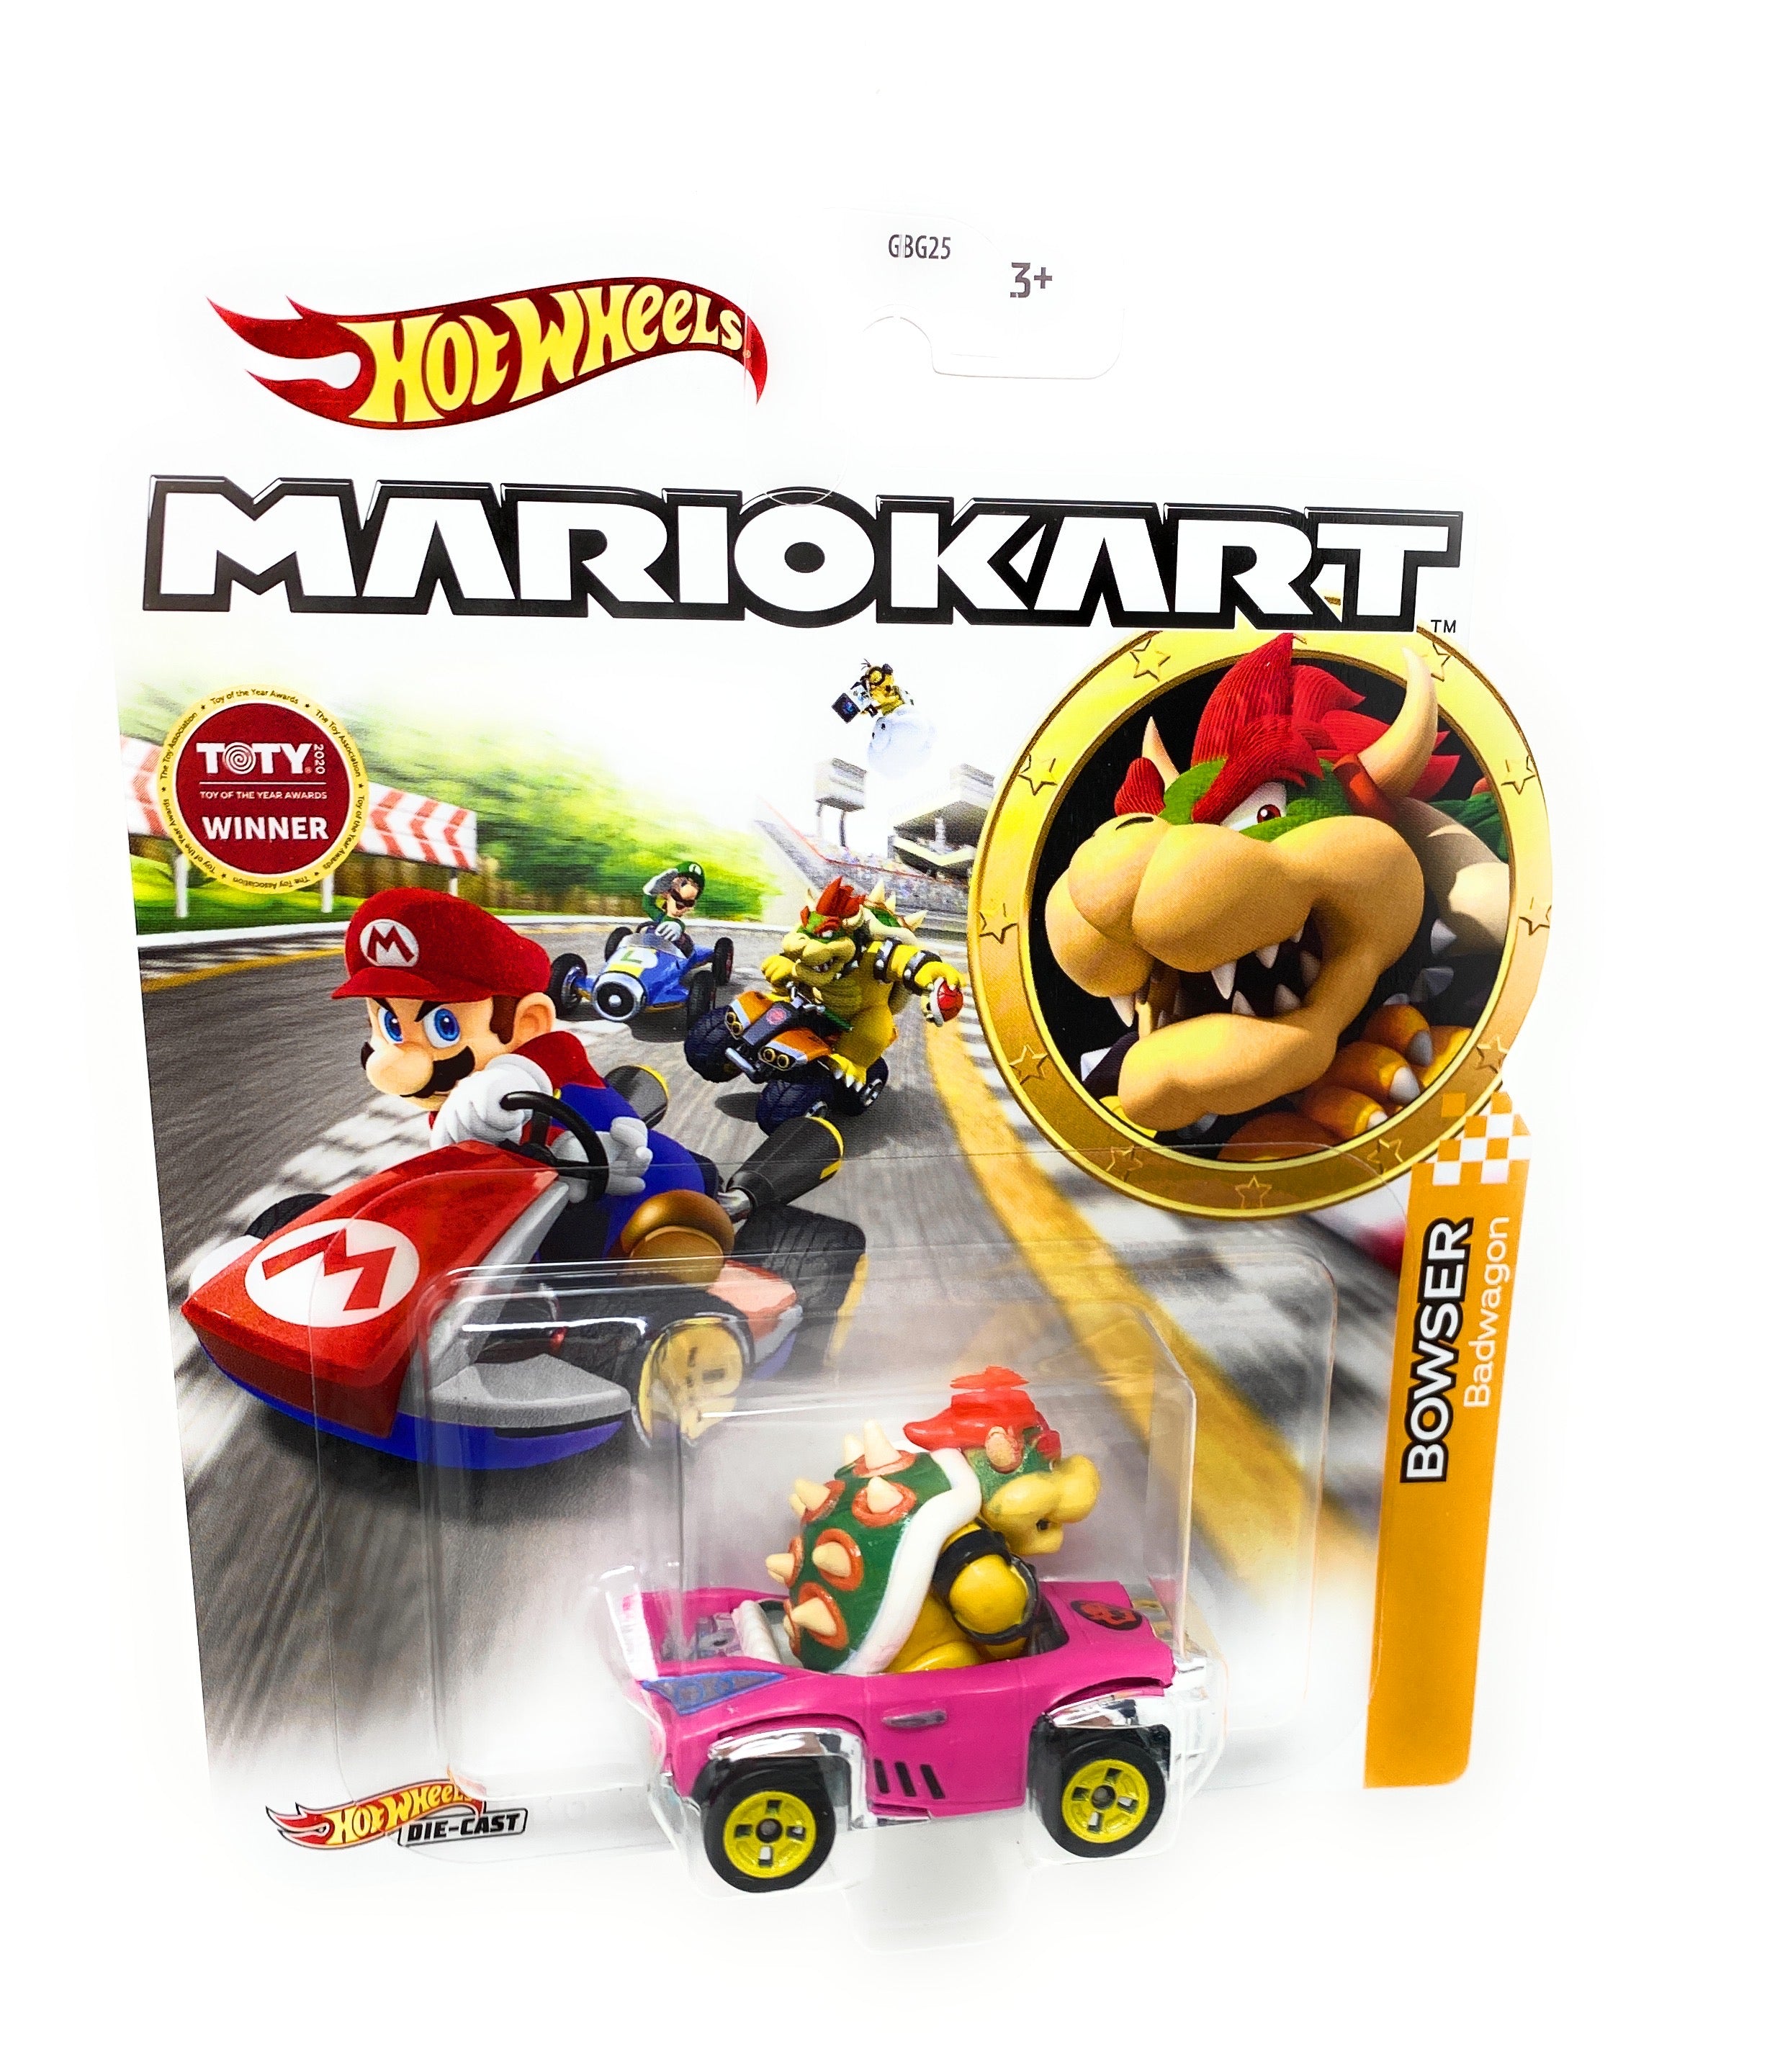 Hot Wheels Mario Kart Bowser Badwagon Kart